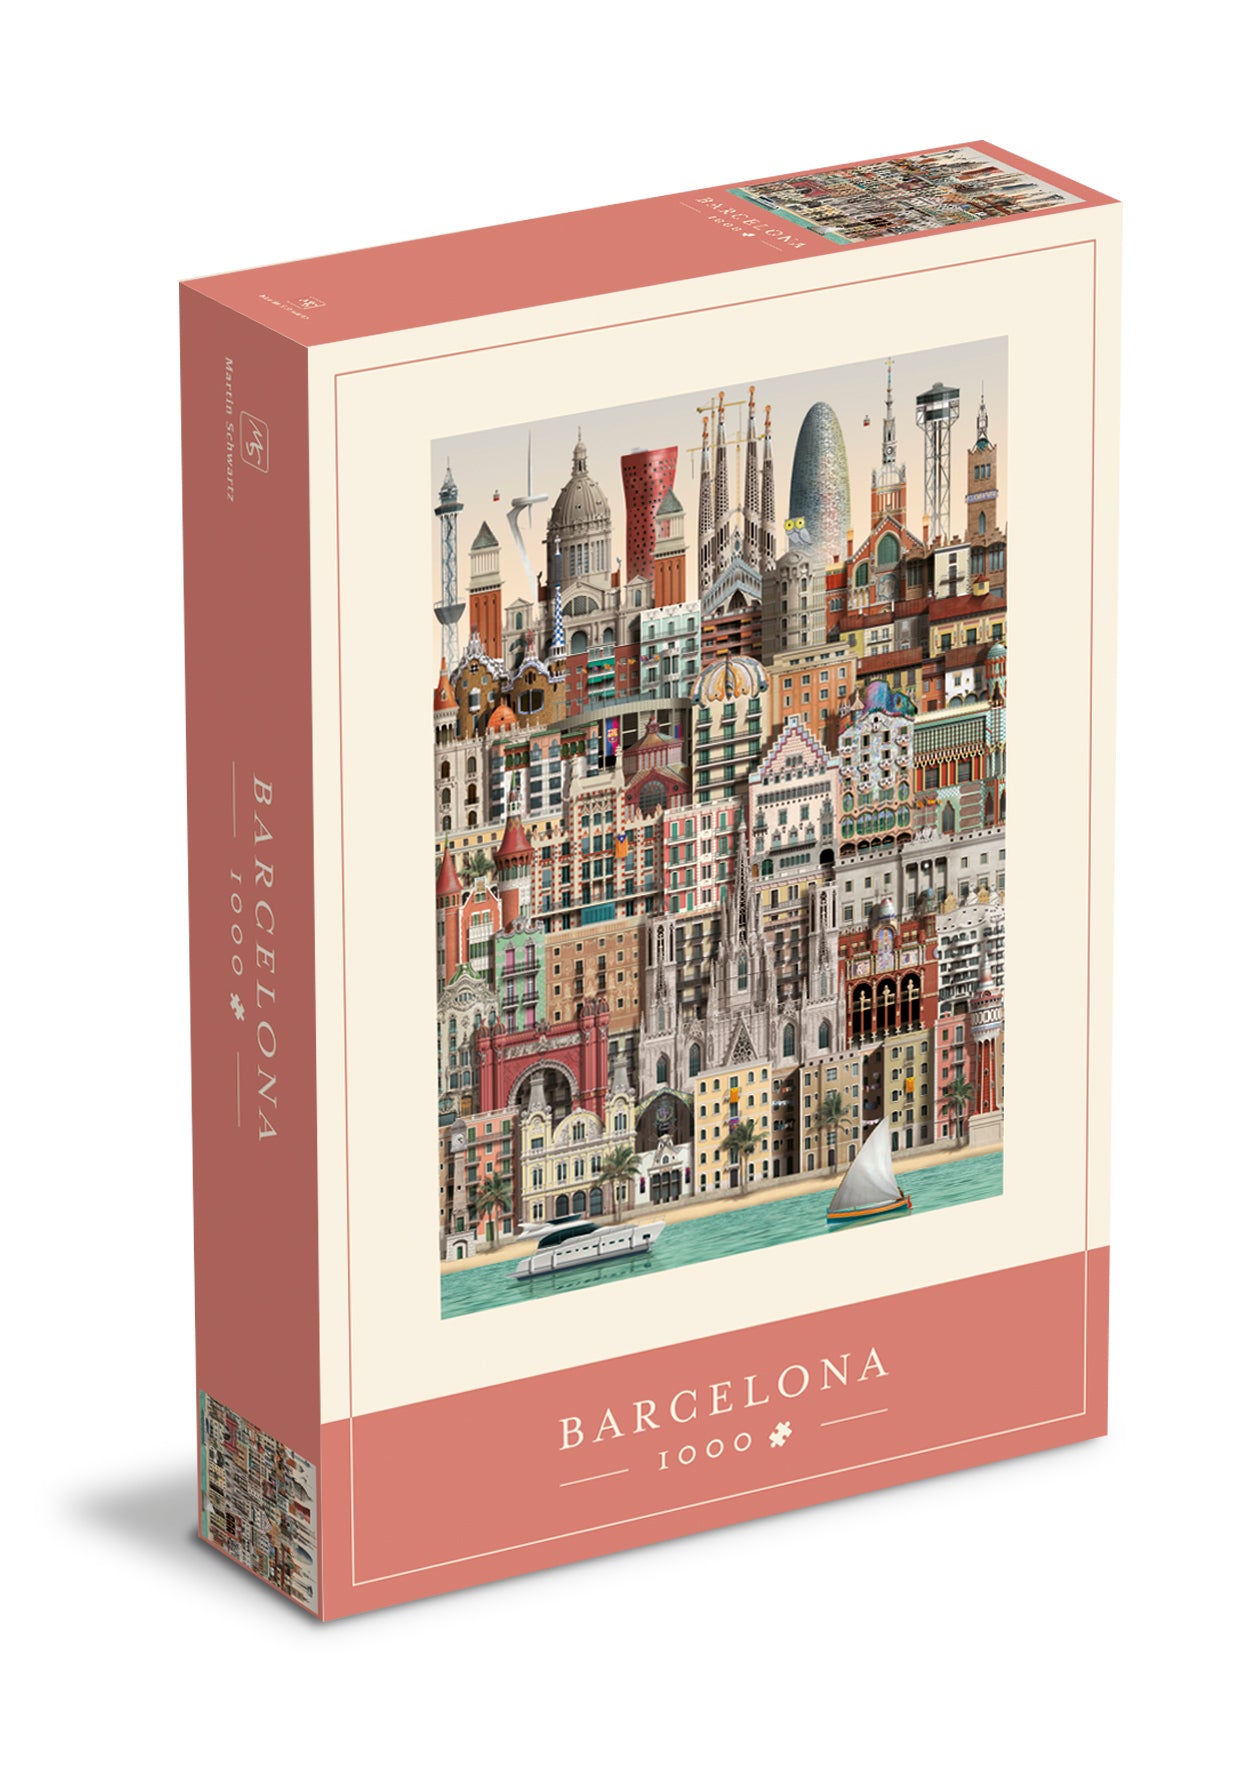 Puzzle Barcelona (1000 pieces)